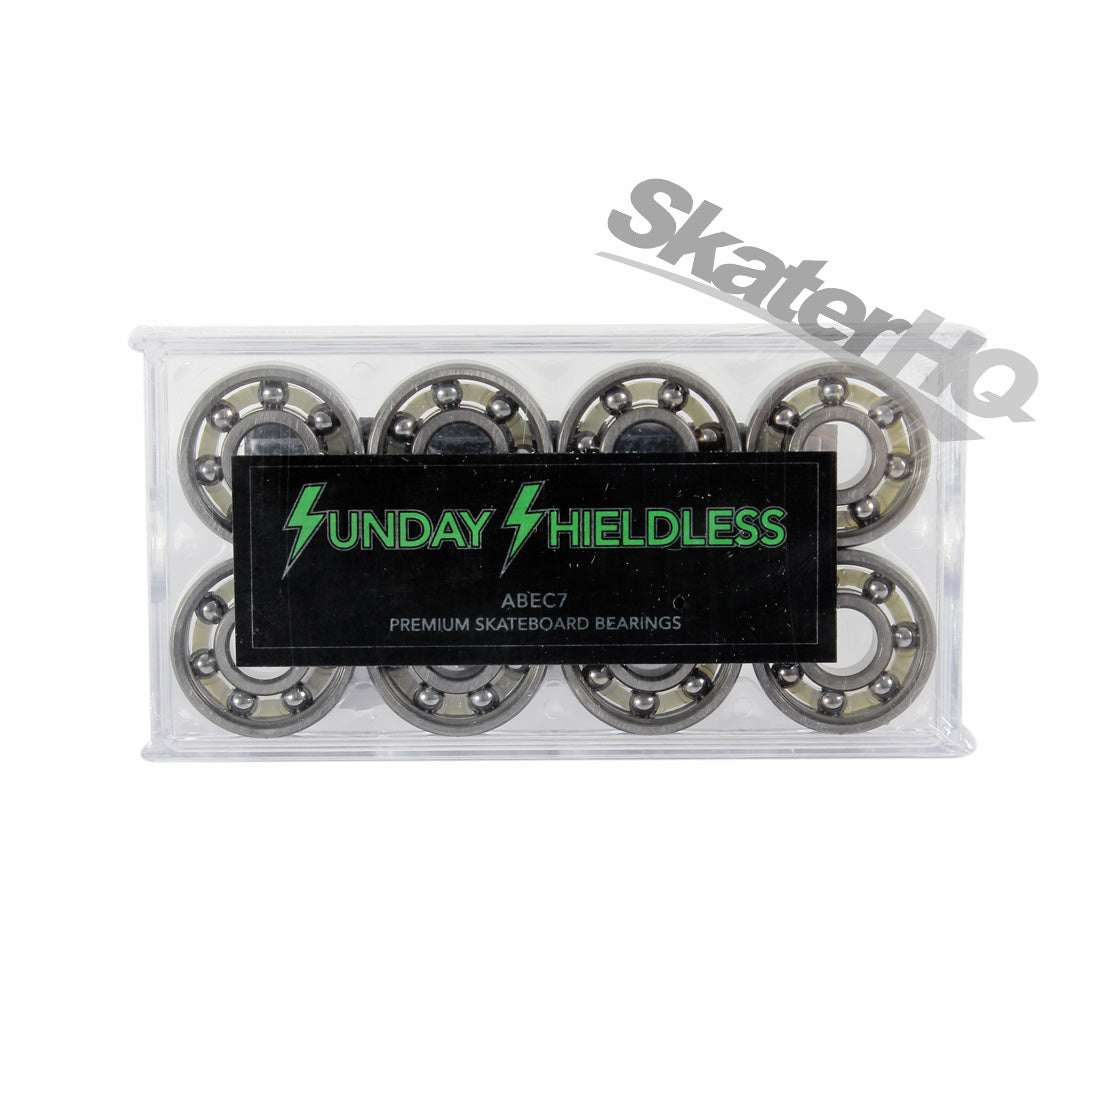 Sunday ABEC 7 Shieldless Bearings - 8pk Skateboard Bearings